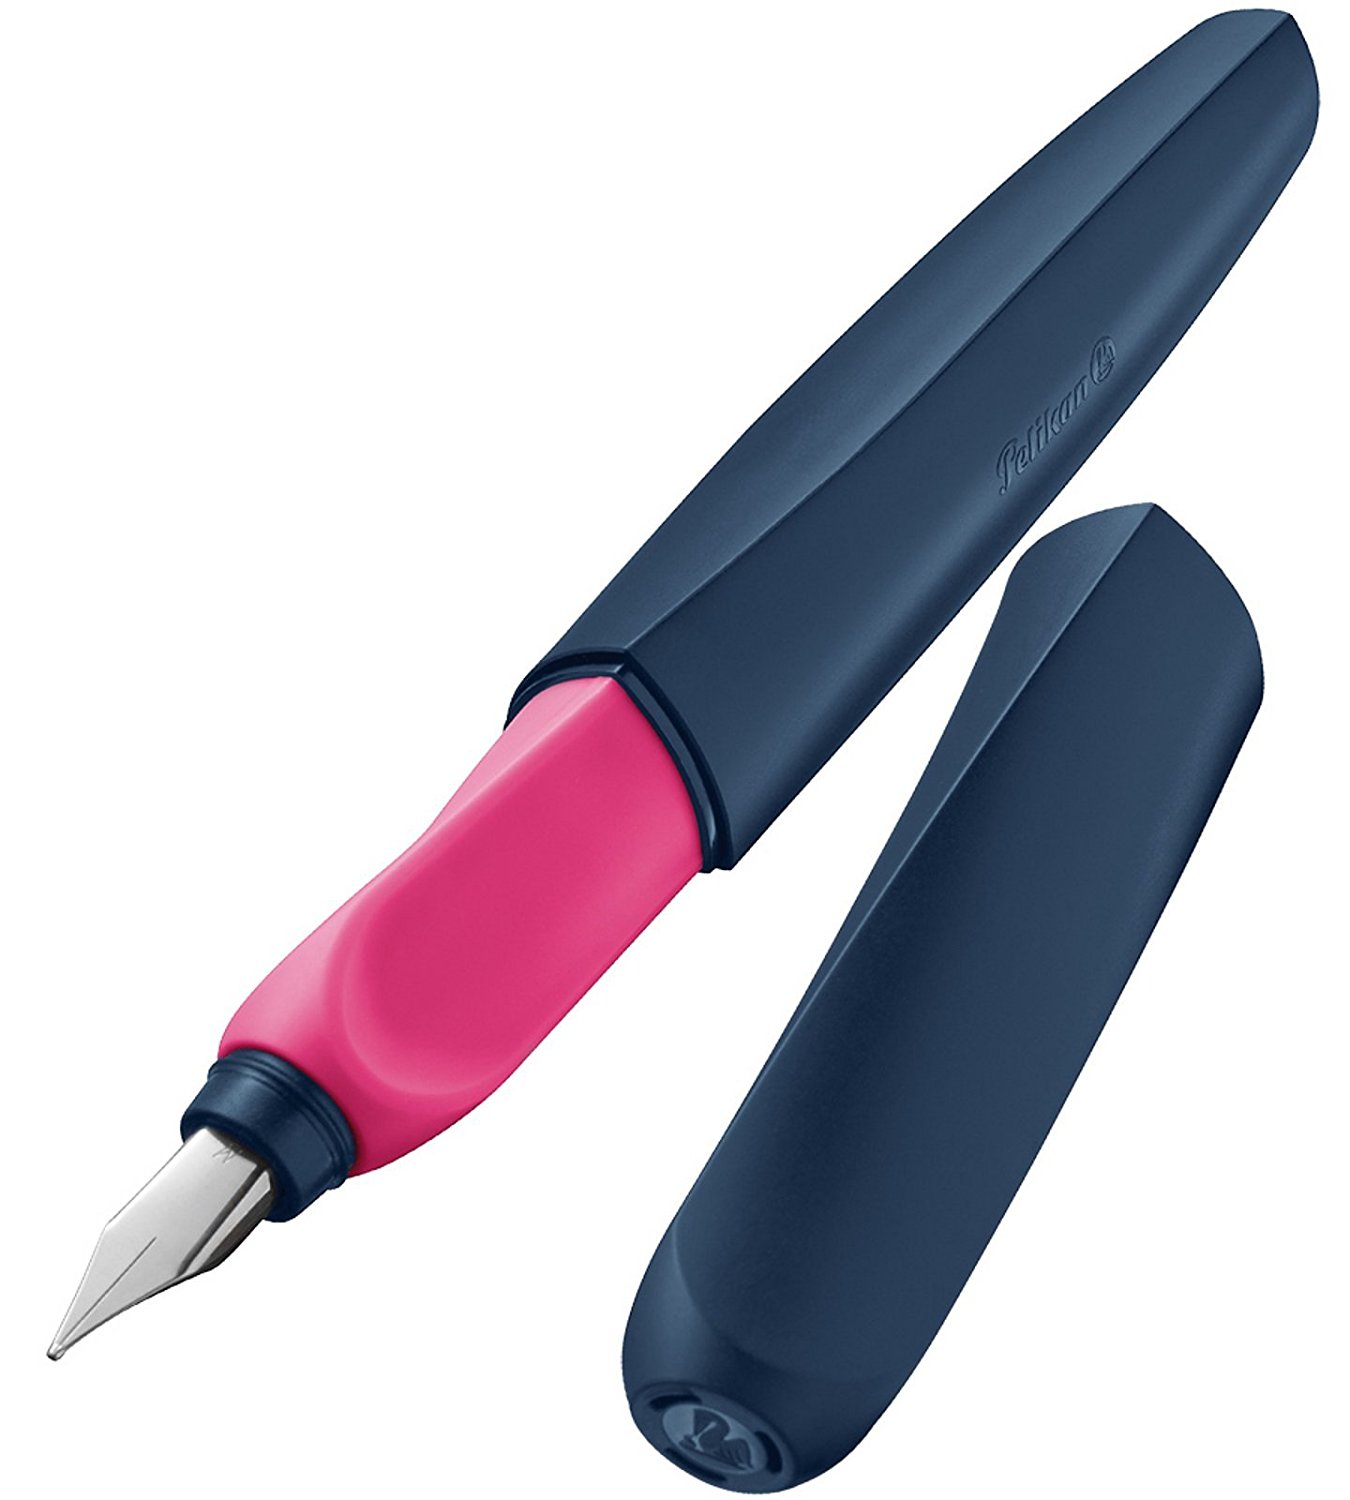 Amazon.com : Pelikan Twist Fountain Pen, Medium Nib, Dark Blue/Pink ...